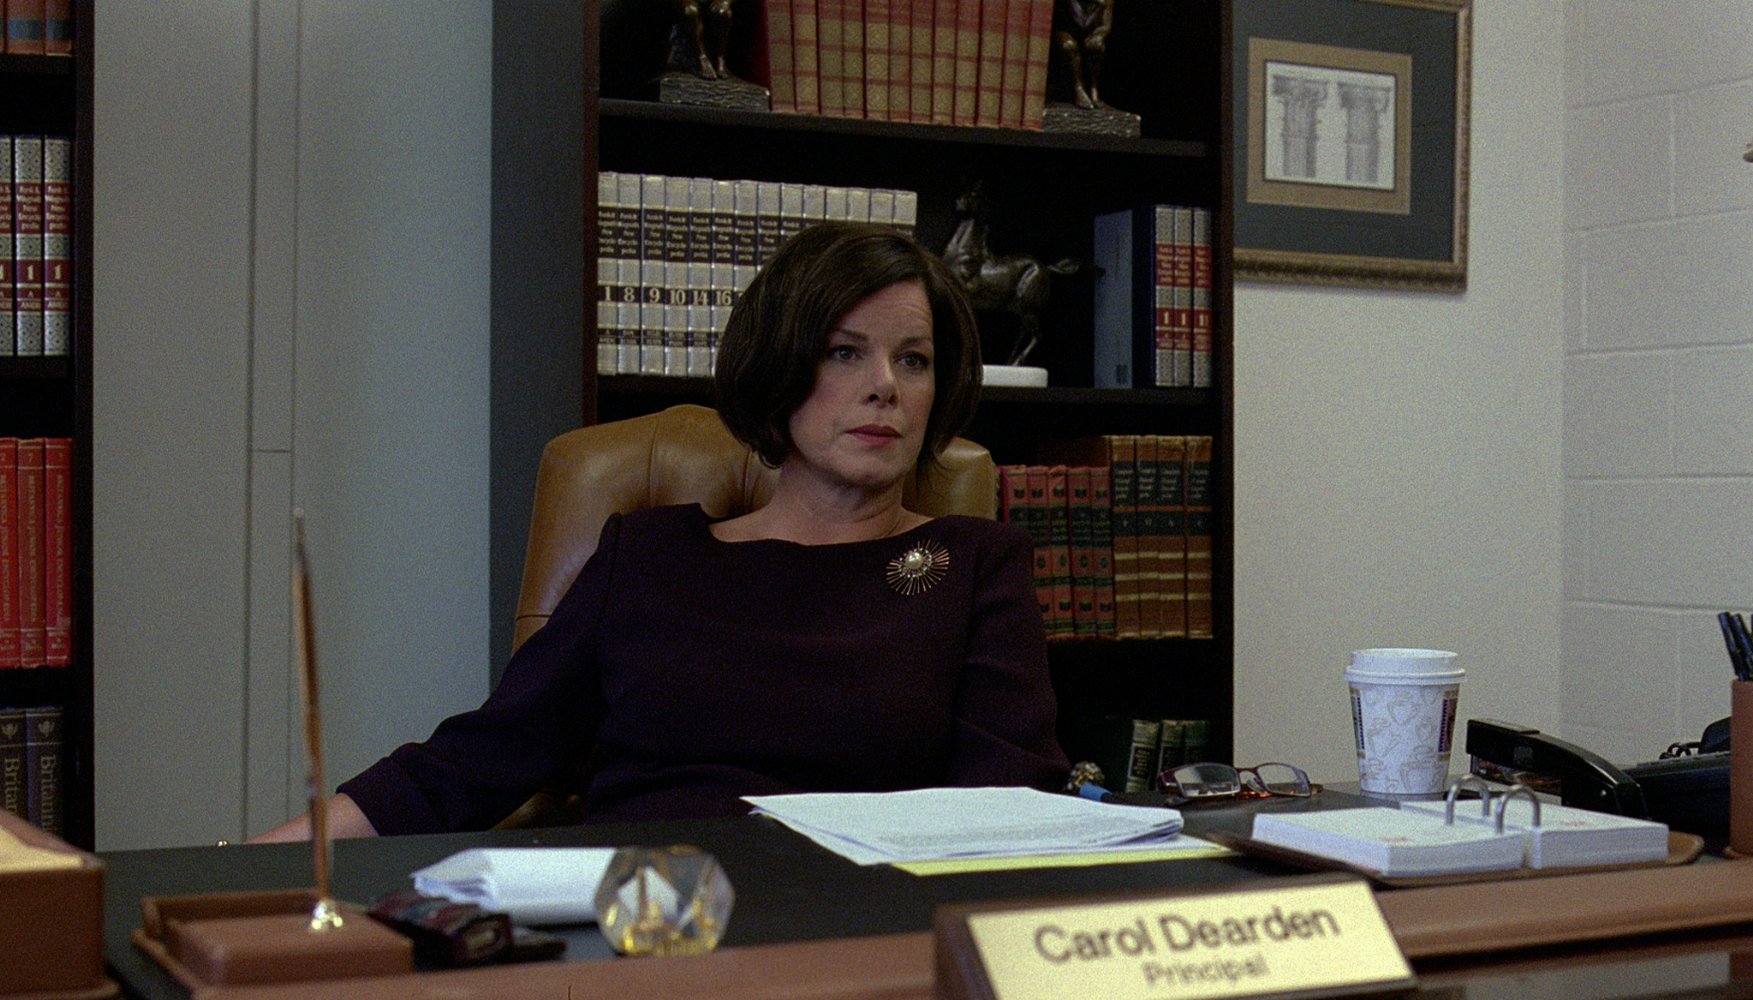 Principal Carol Dearden